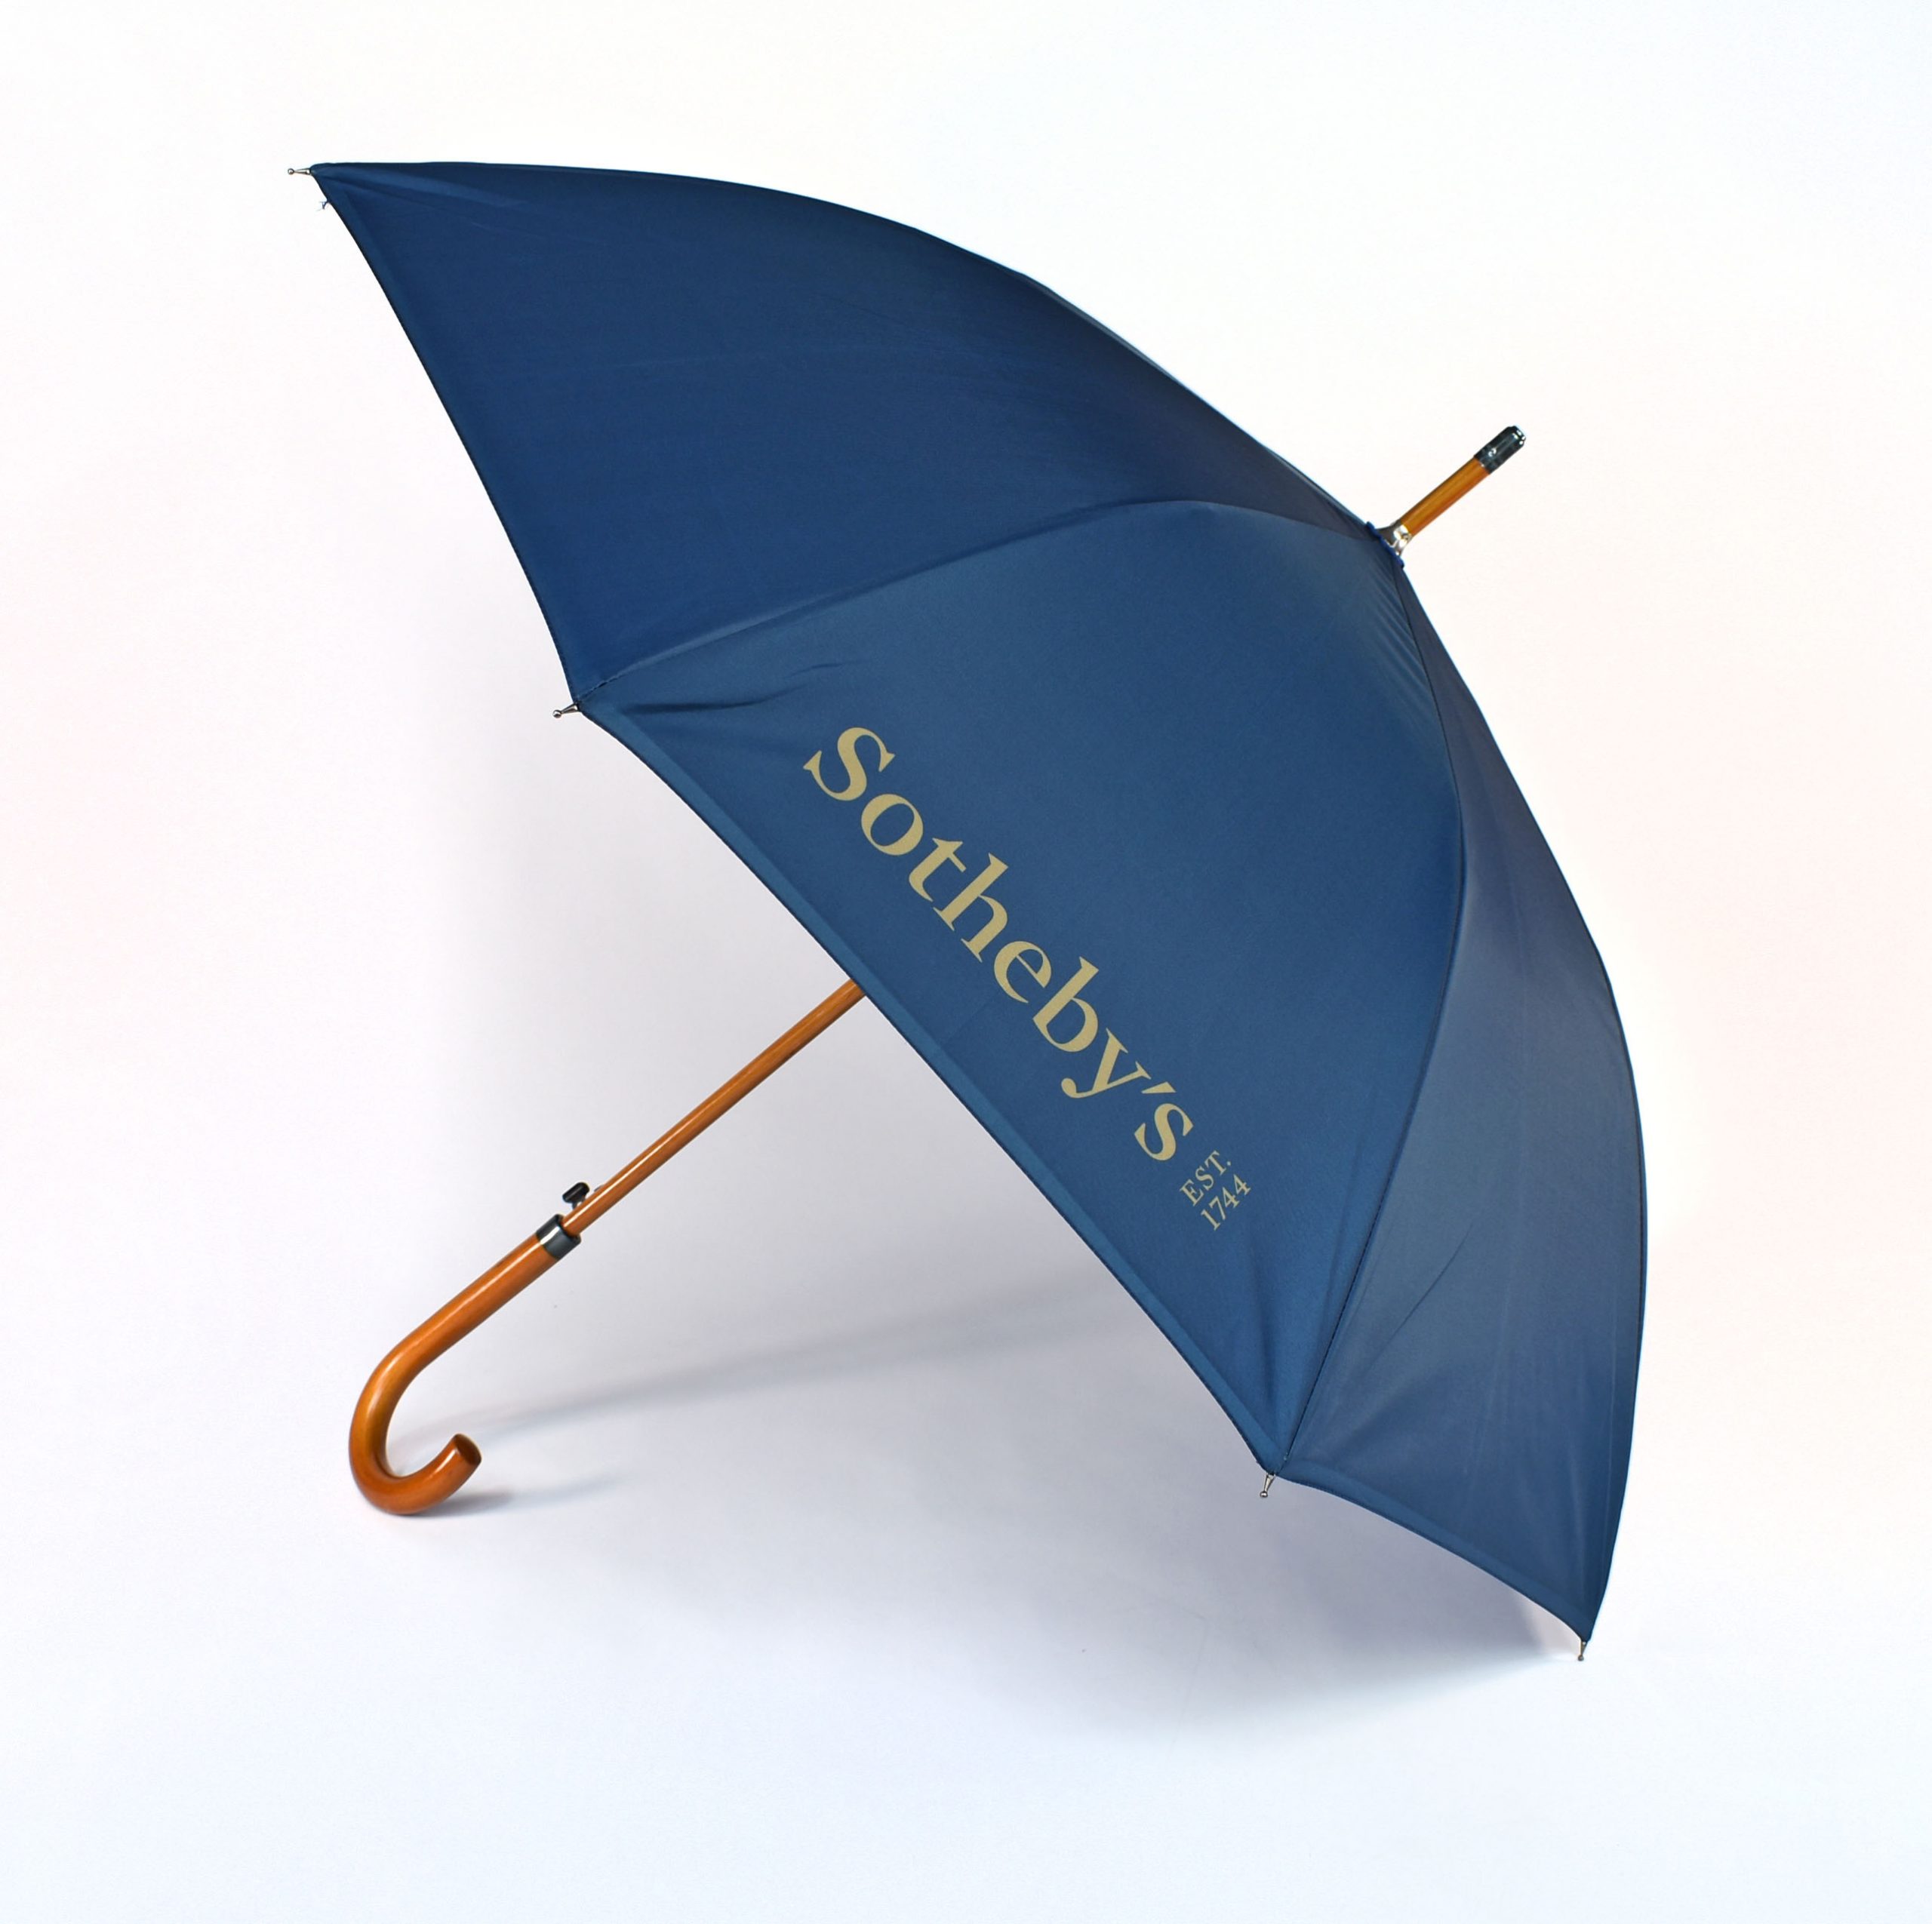 Sotheby's gold printed umbrella